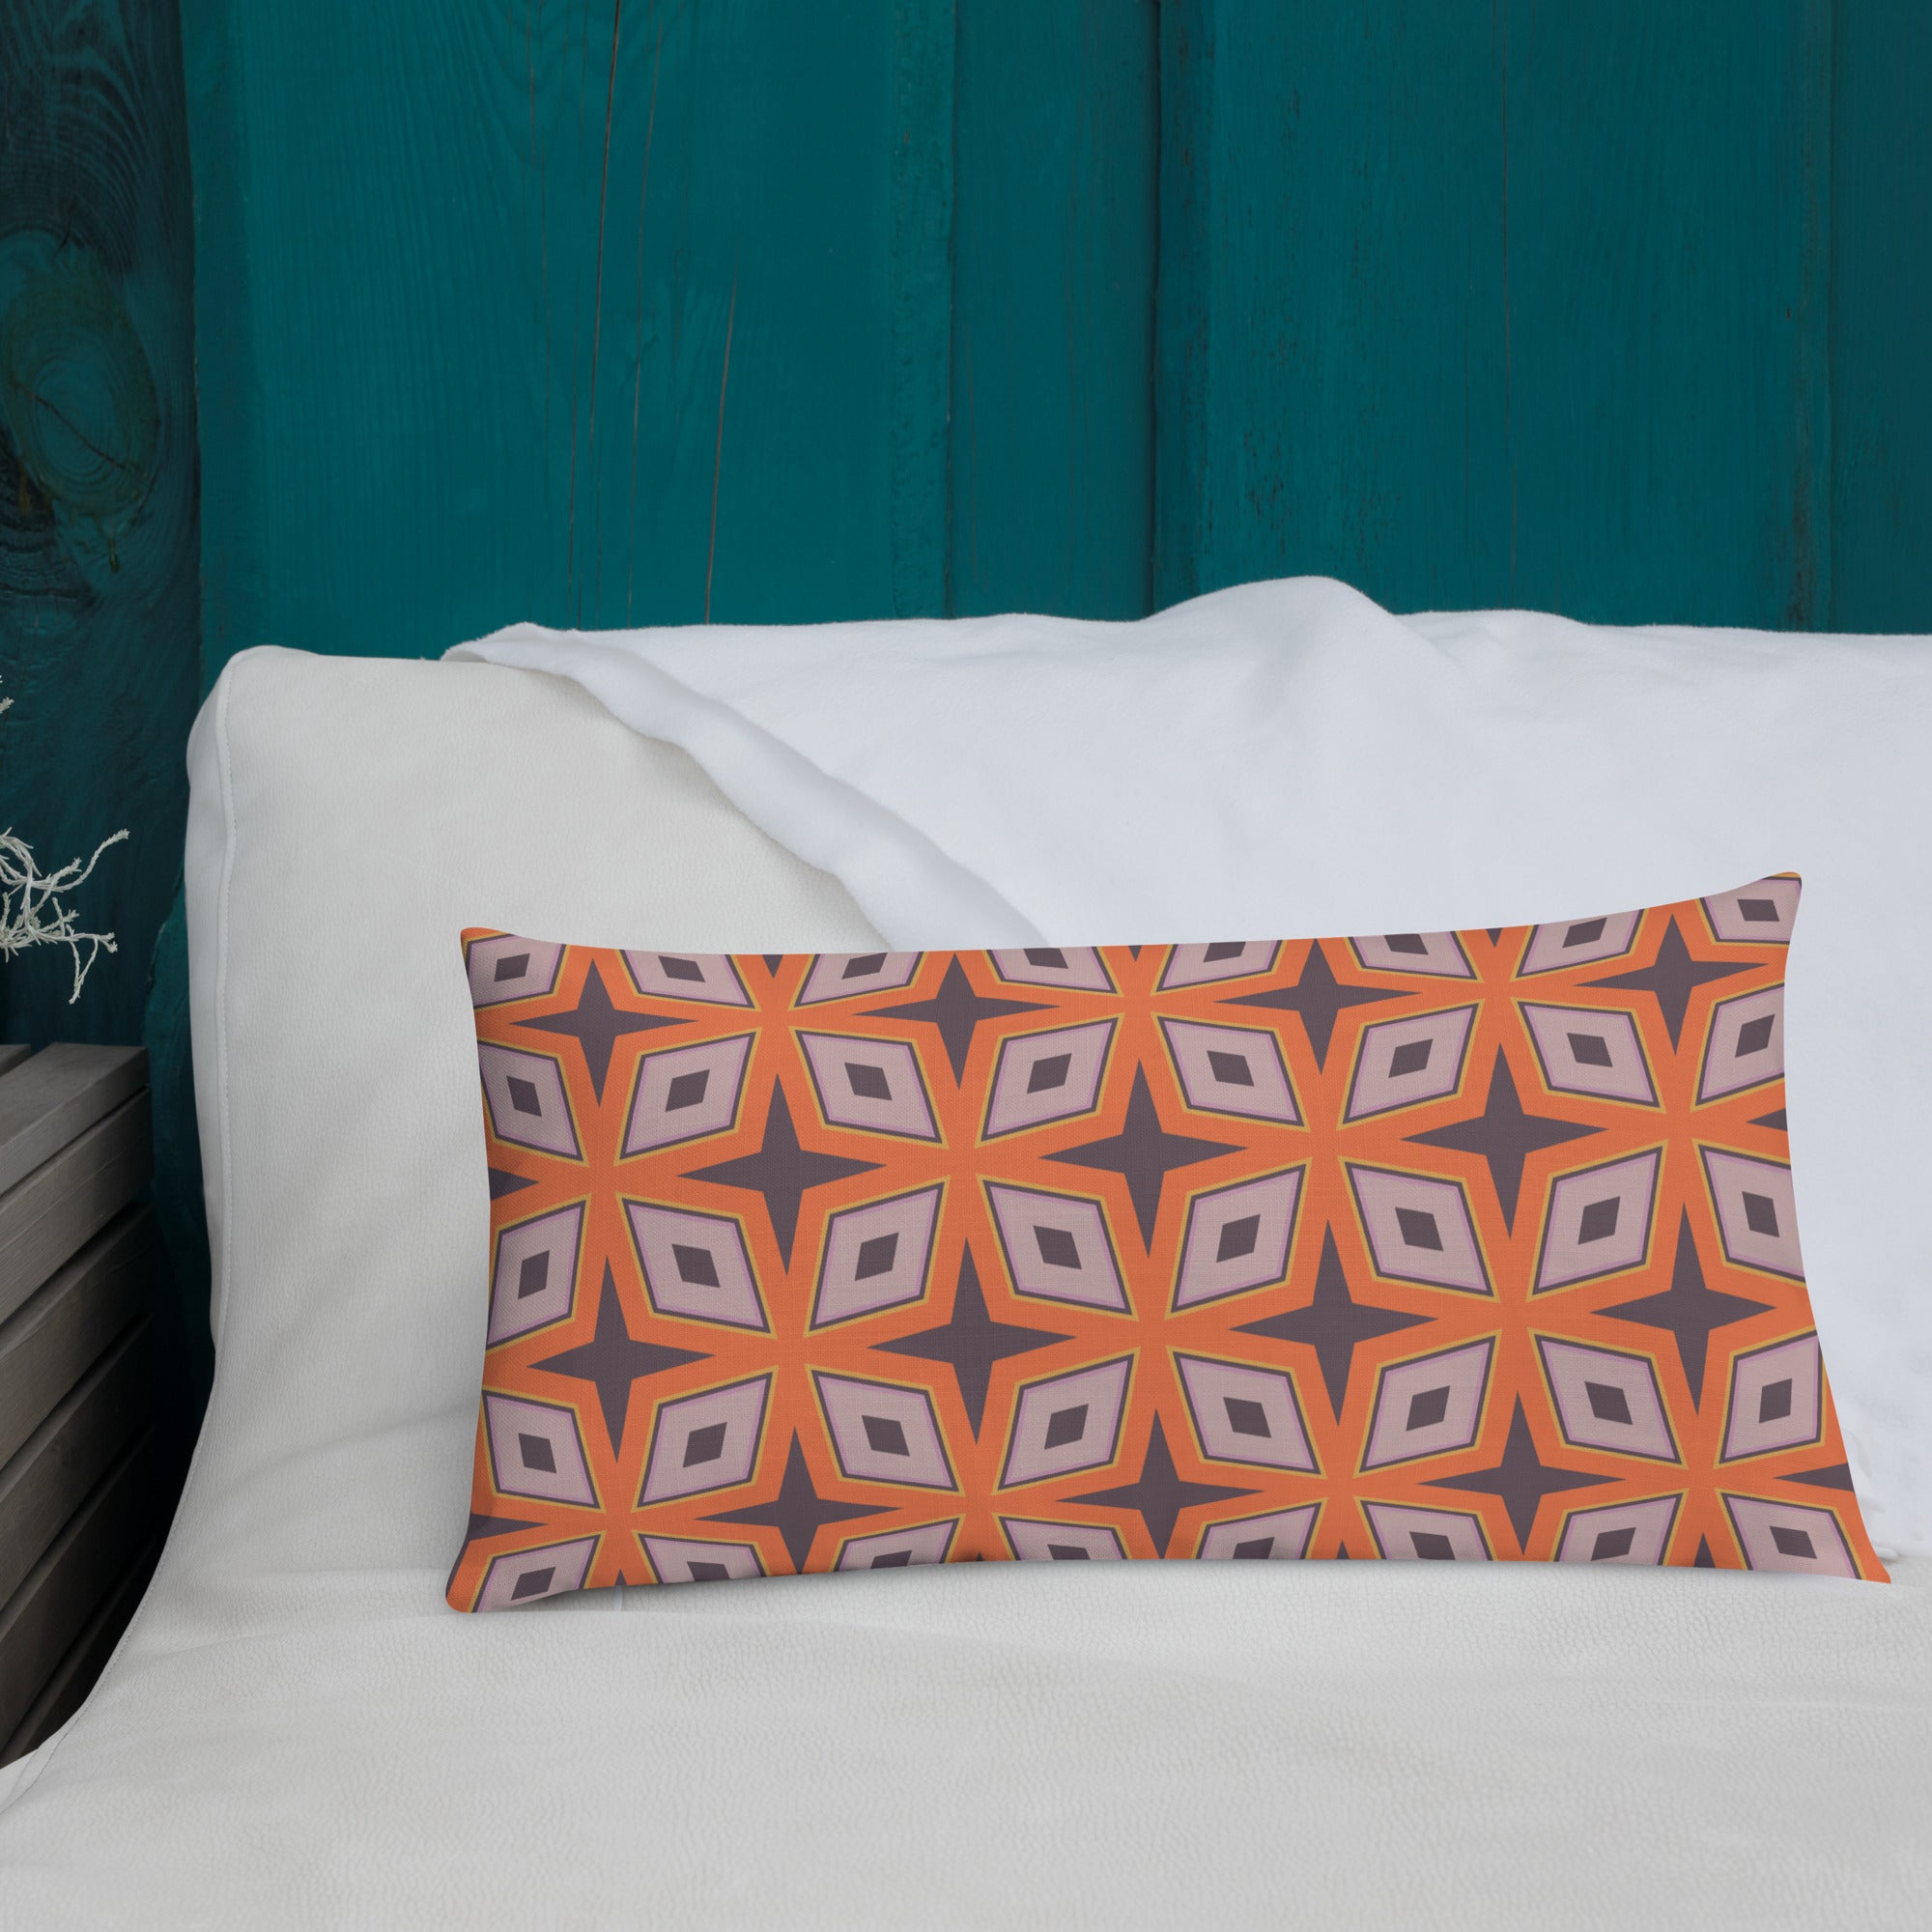 Close-up of Artistic Expressions Premium Accent Pillow fabric design